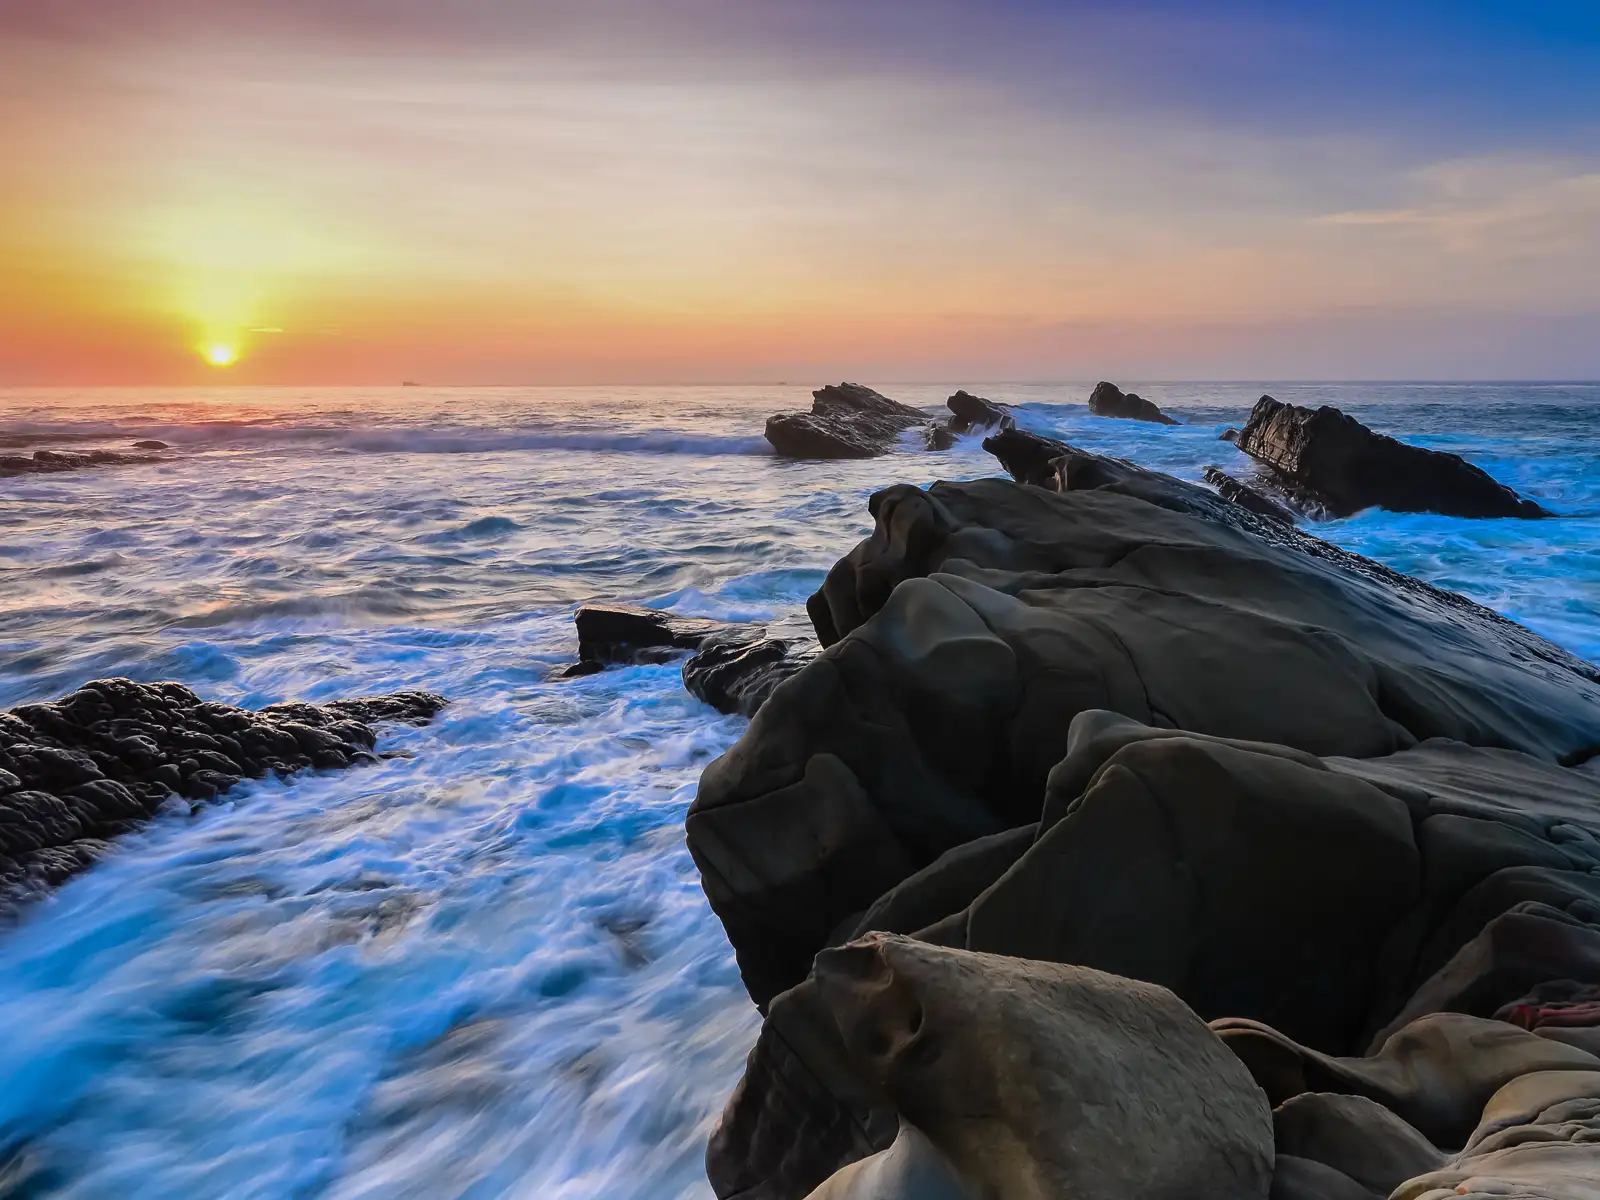 The sun rises as gentle waves crash over the rocks of Xiaoyeliu.